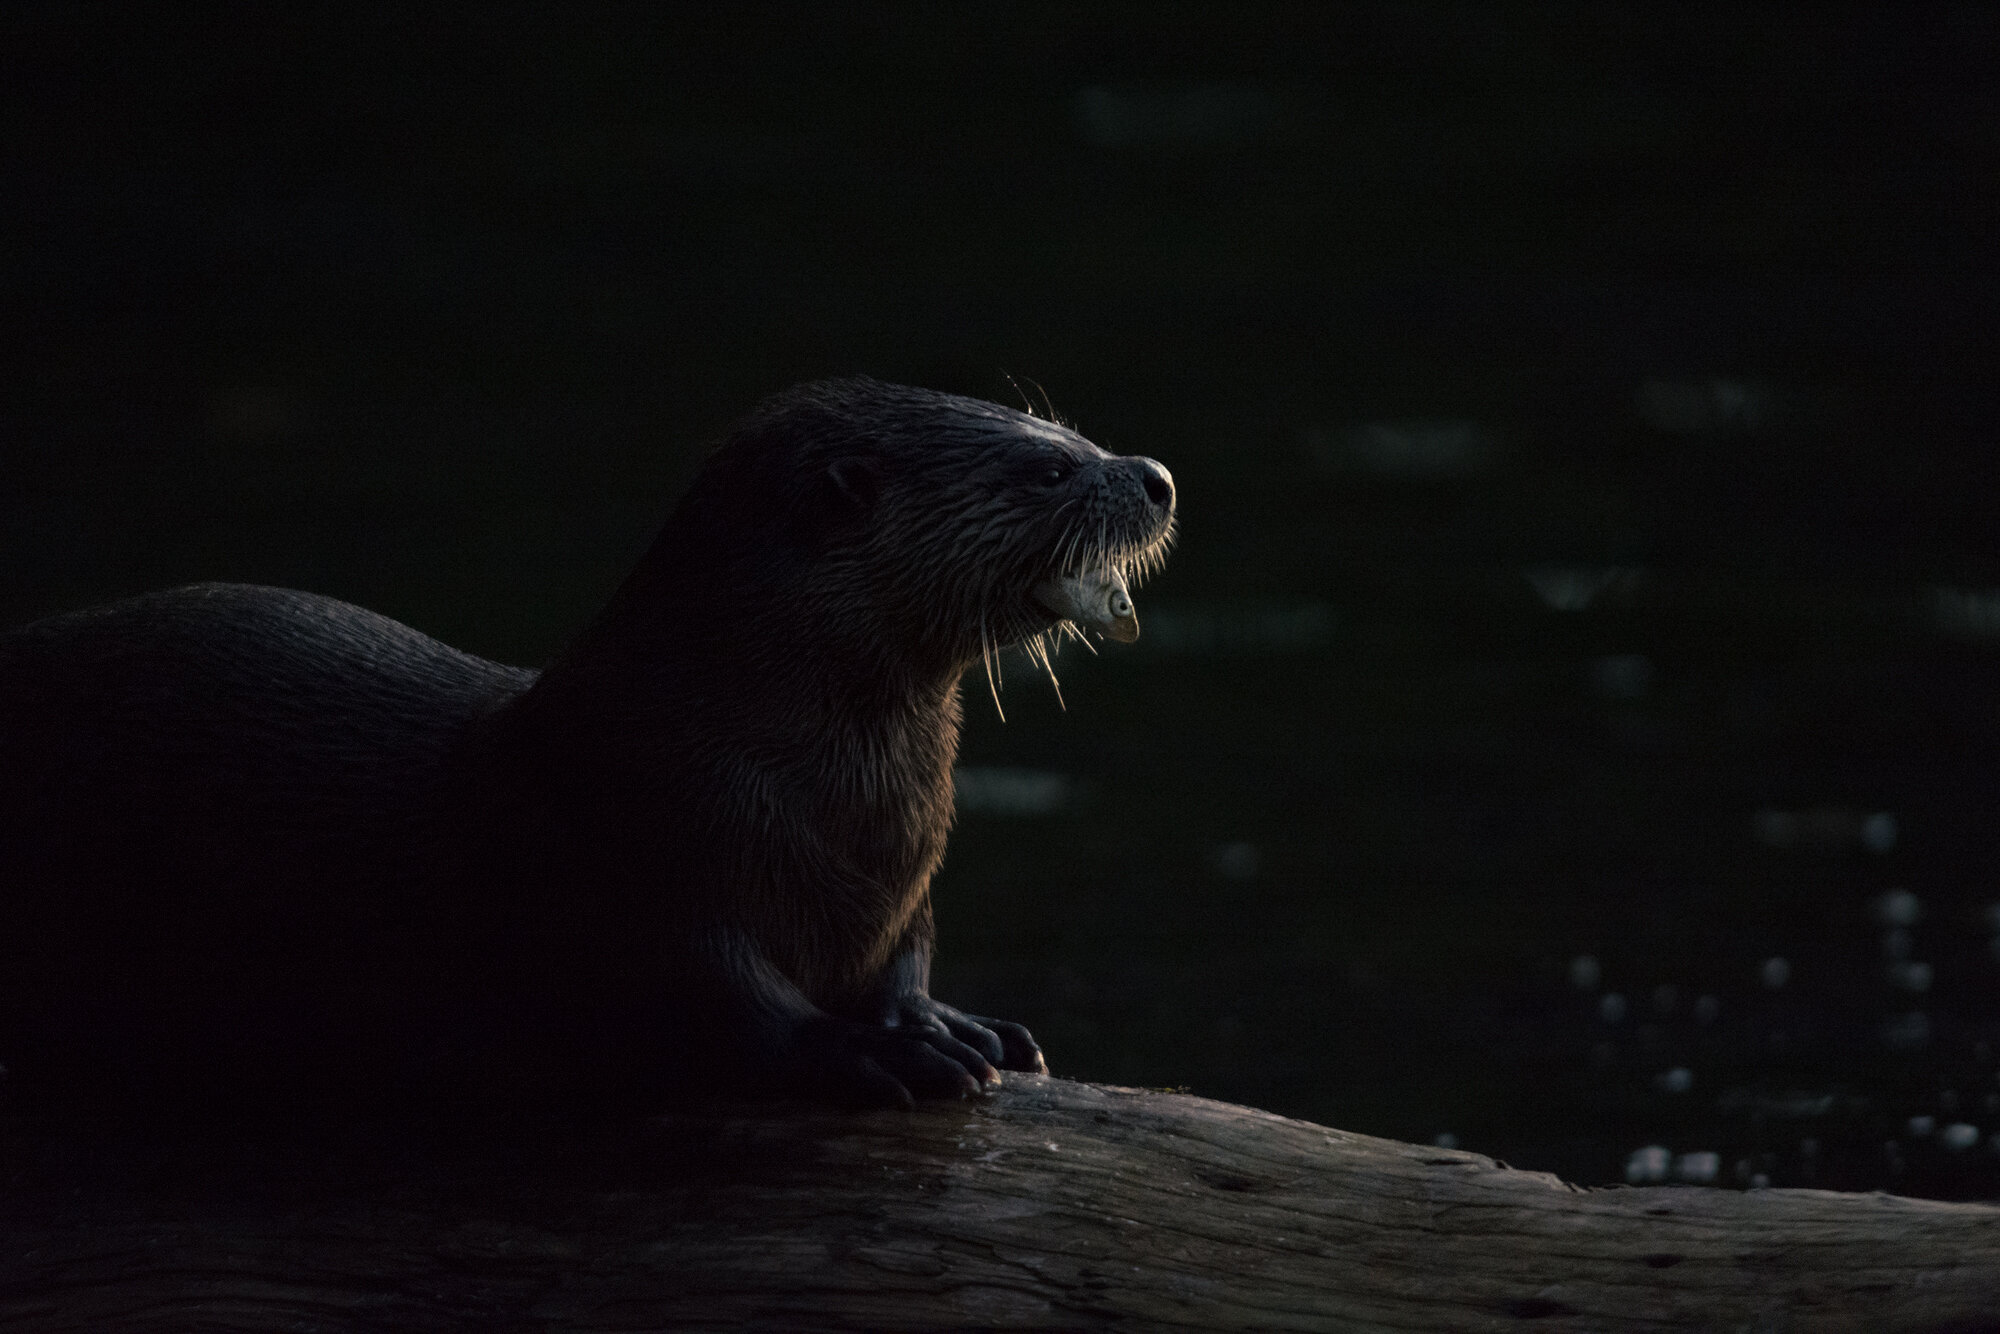 North American River Otter